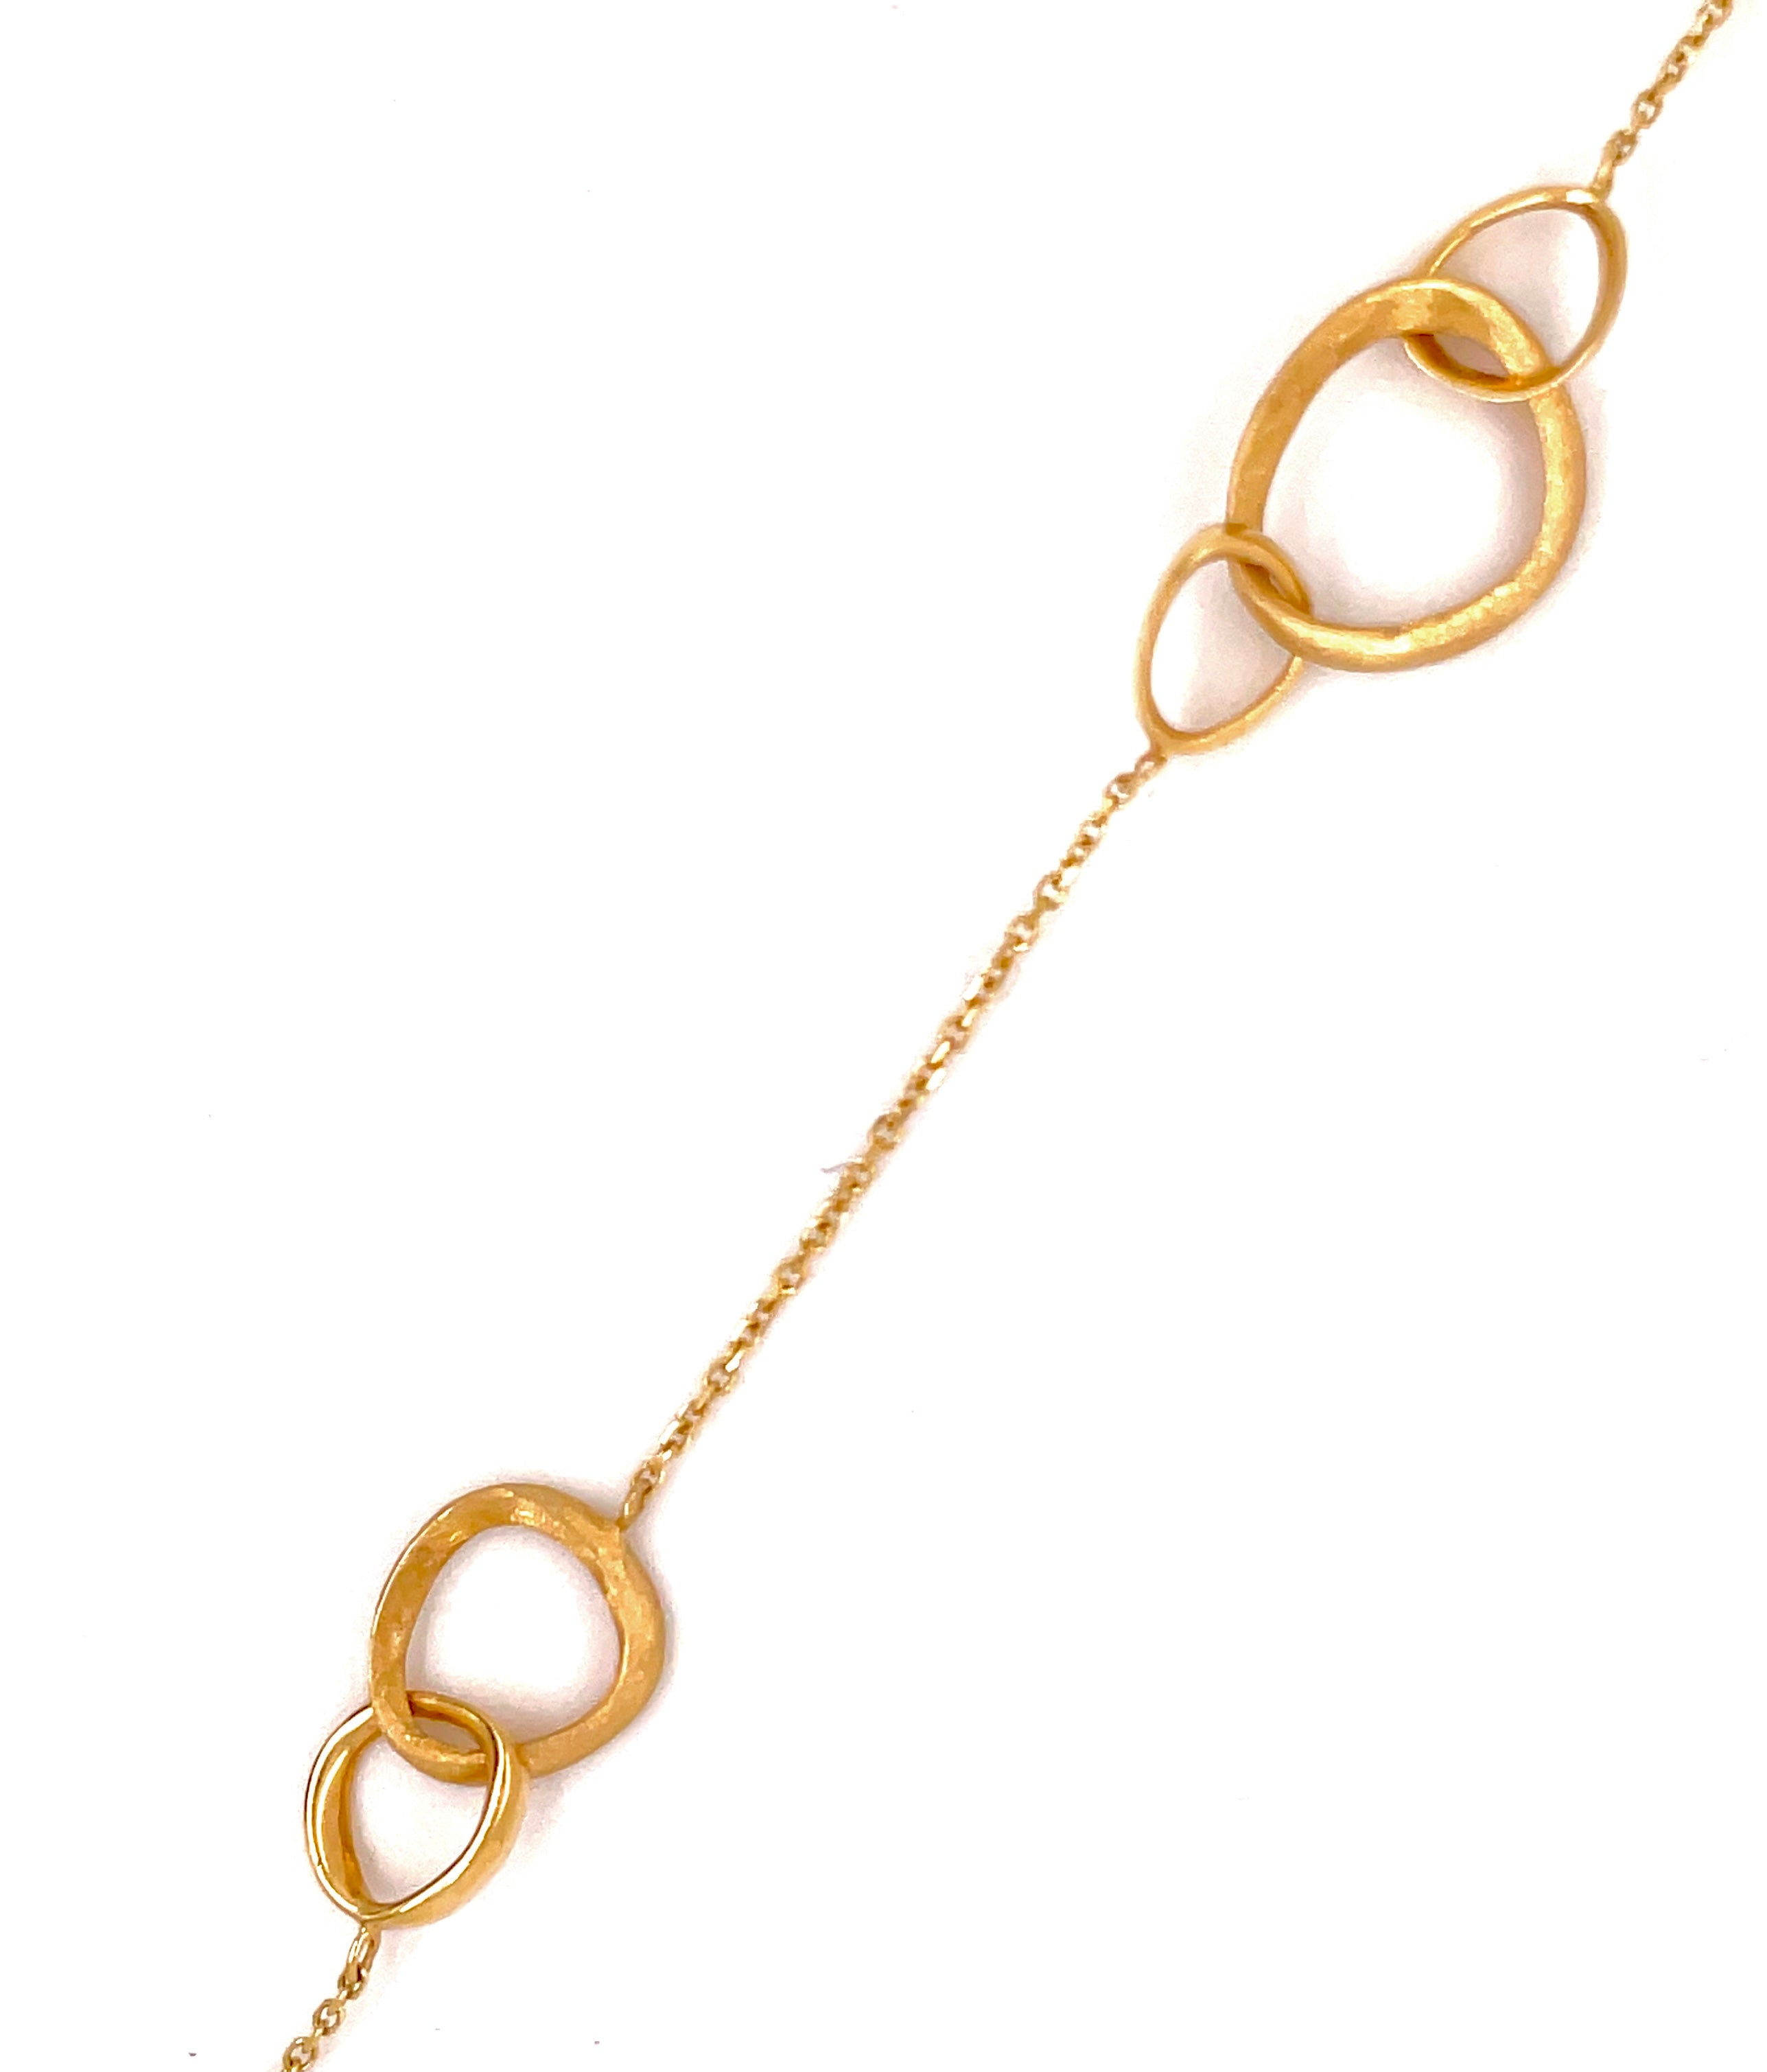 Elegant Italian Gold Bracelet 18k Gold Plated Adjustable Cuff Bangle  Women's Hand Bracelets Party Event Jewelry Gift - AliExpress